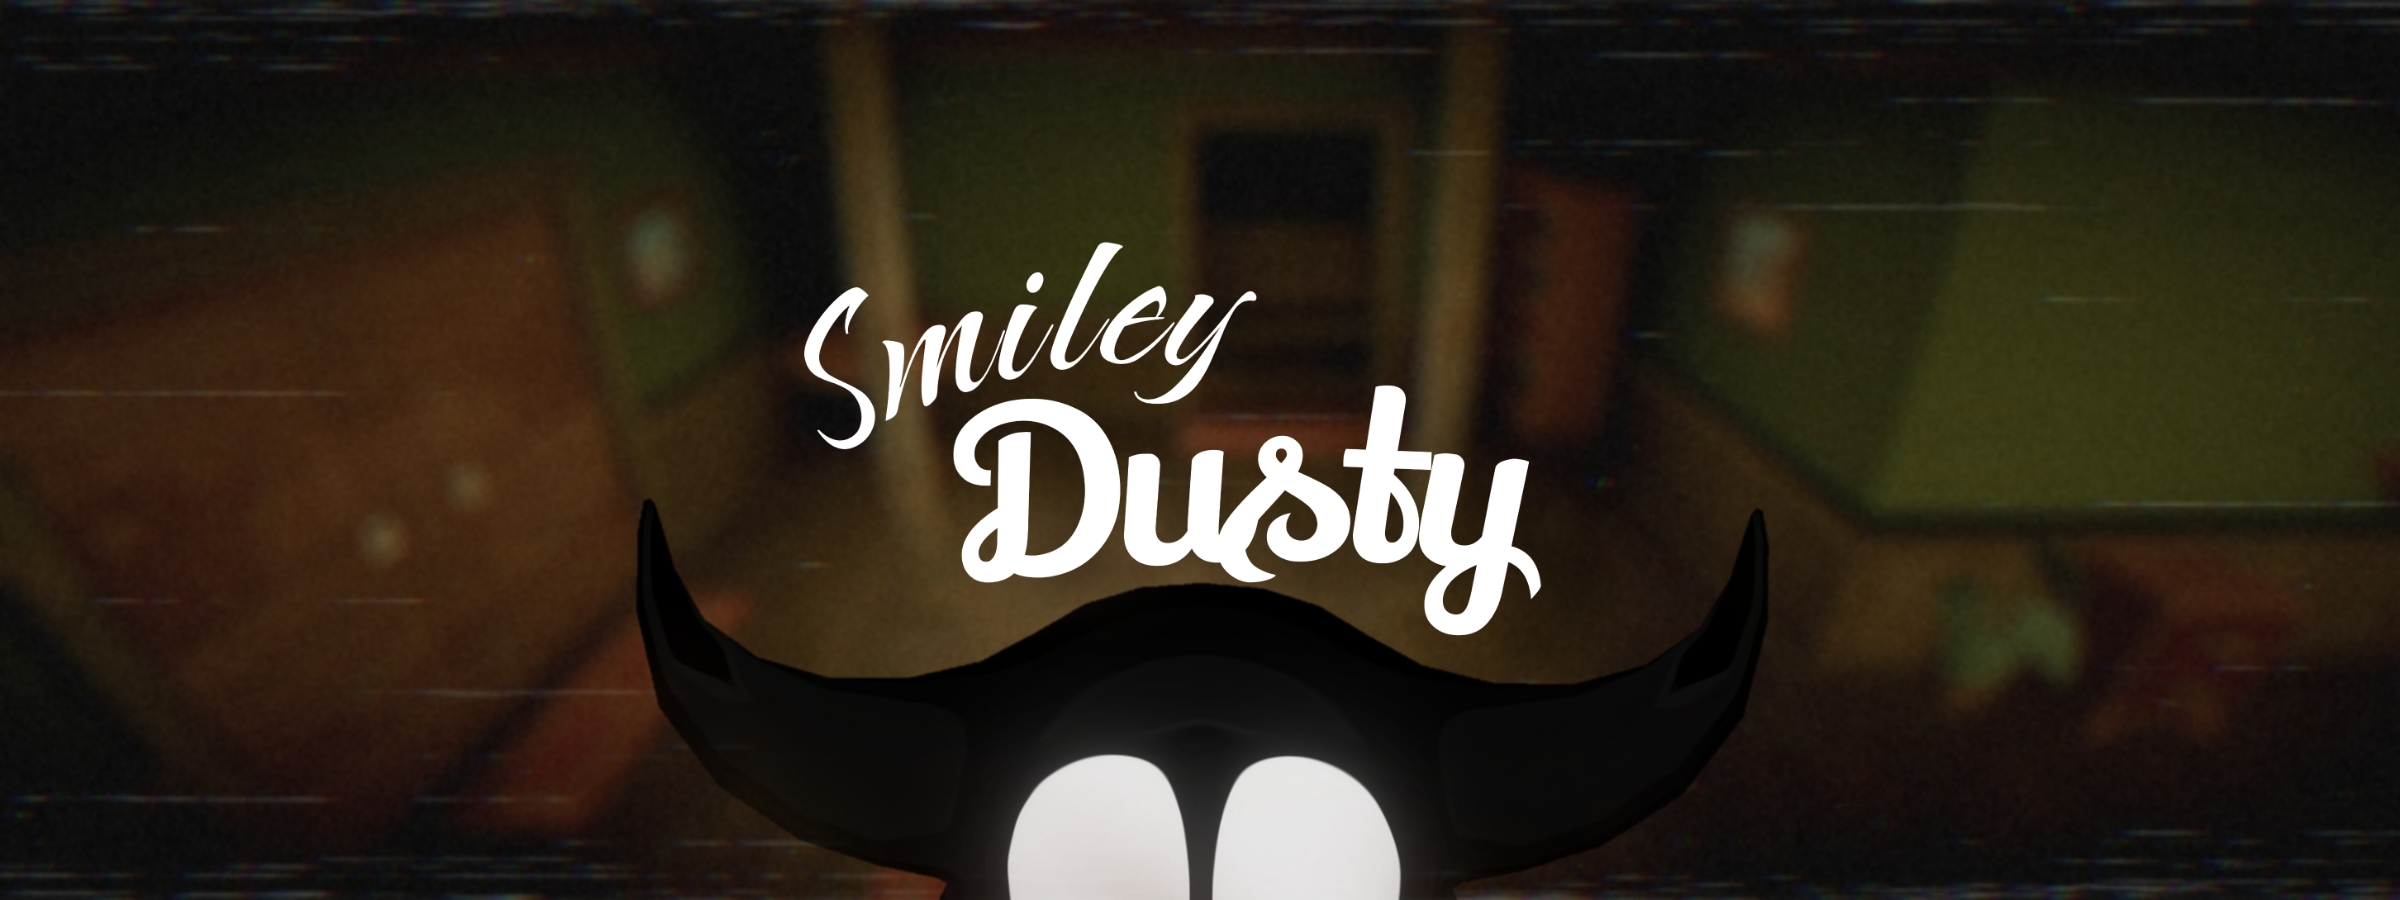 Smiley Dusty